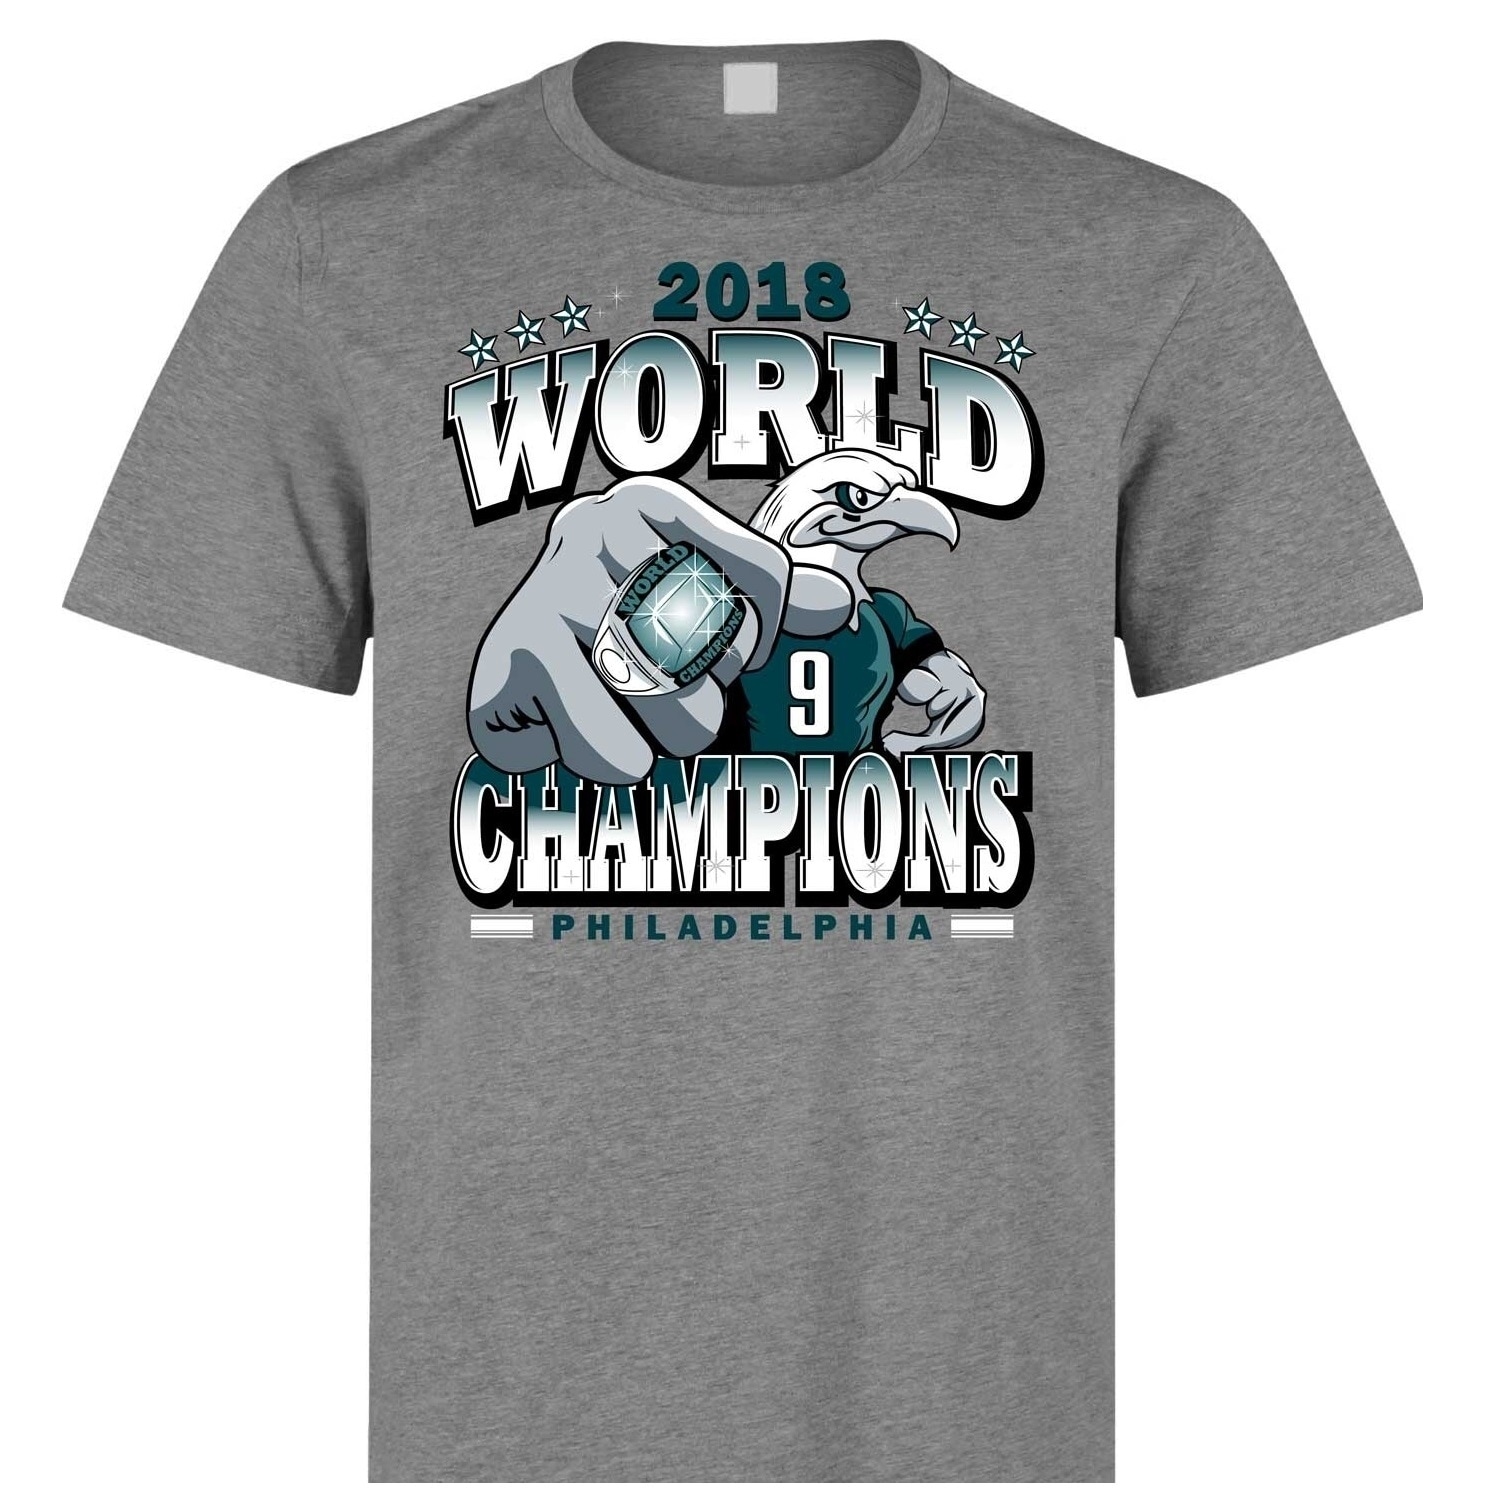 Super Bowl Champions T Shirt 